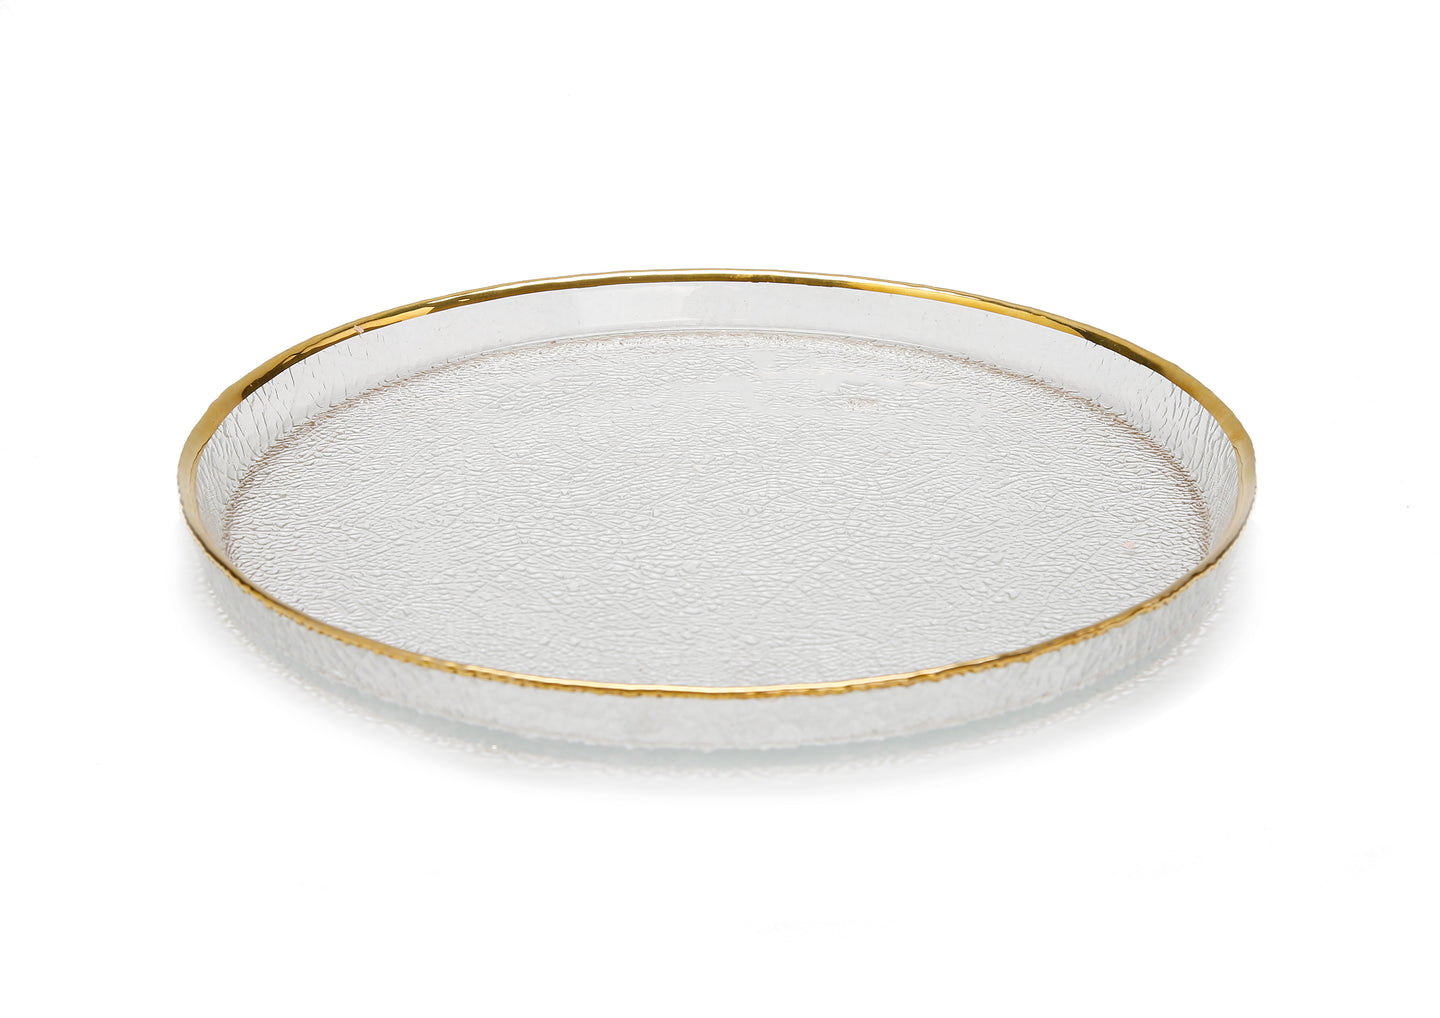 Set of 4 Pebbled Glass Dinner Plates Raised Rim with Gold Border